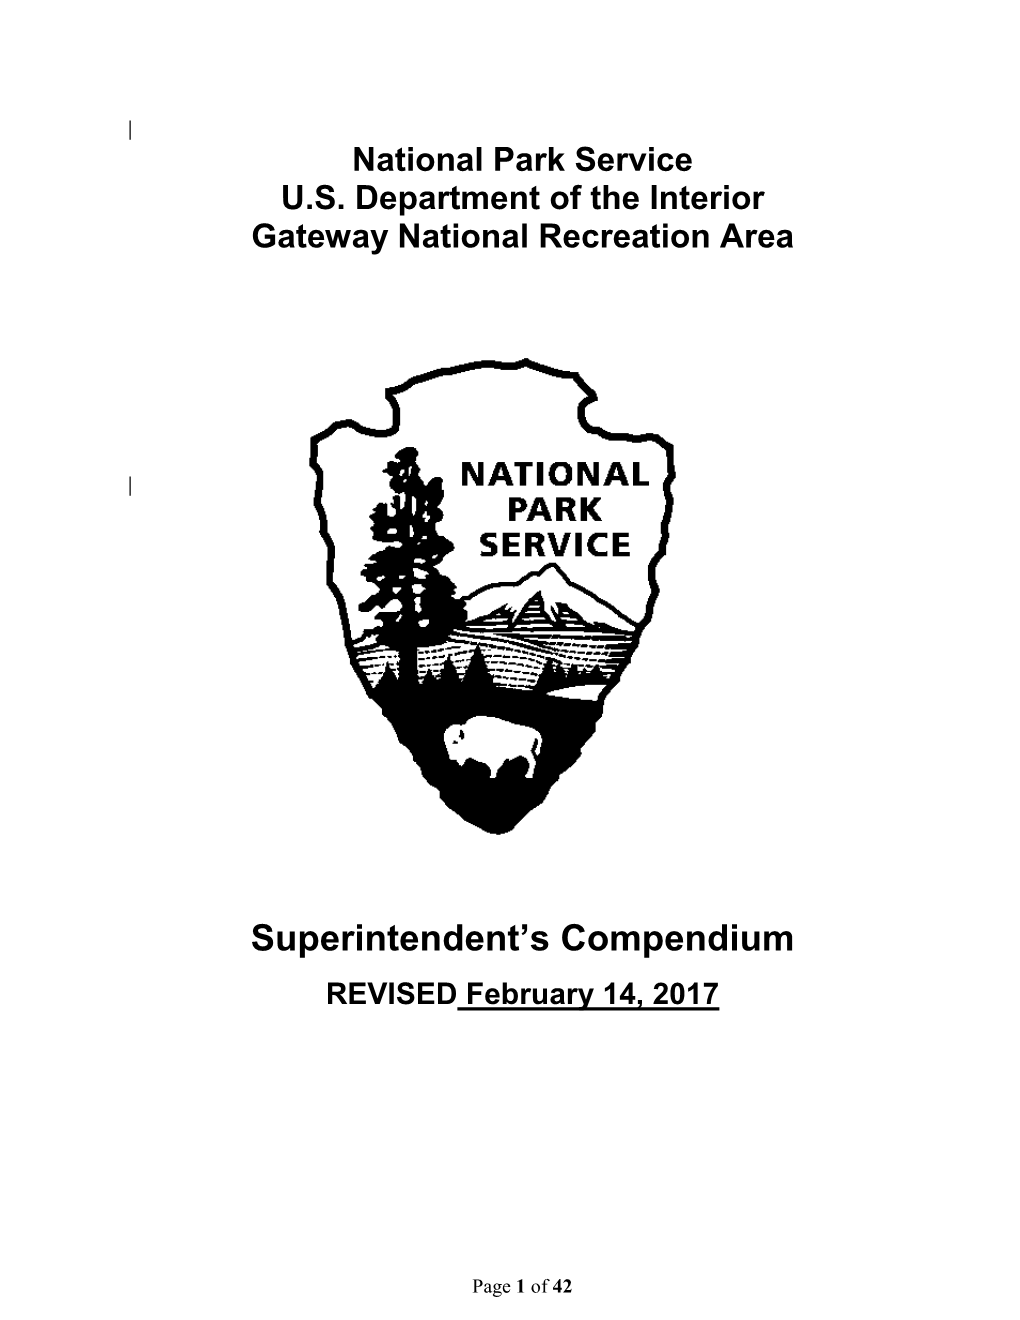 Gateway National Recreation Area Superintendent's Compendium 2017